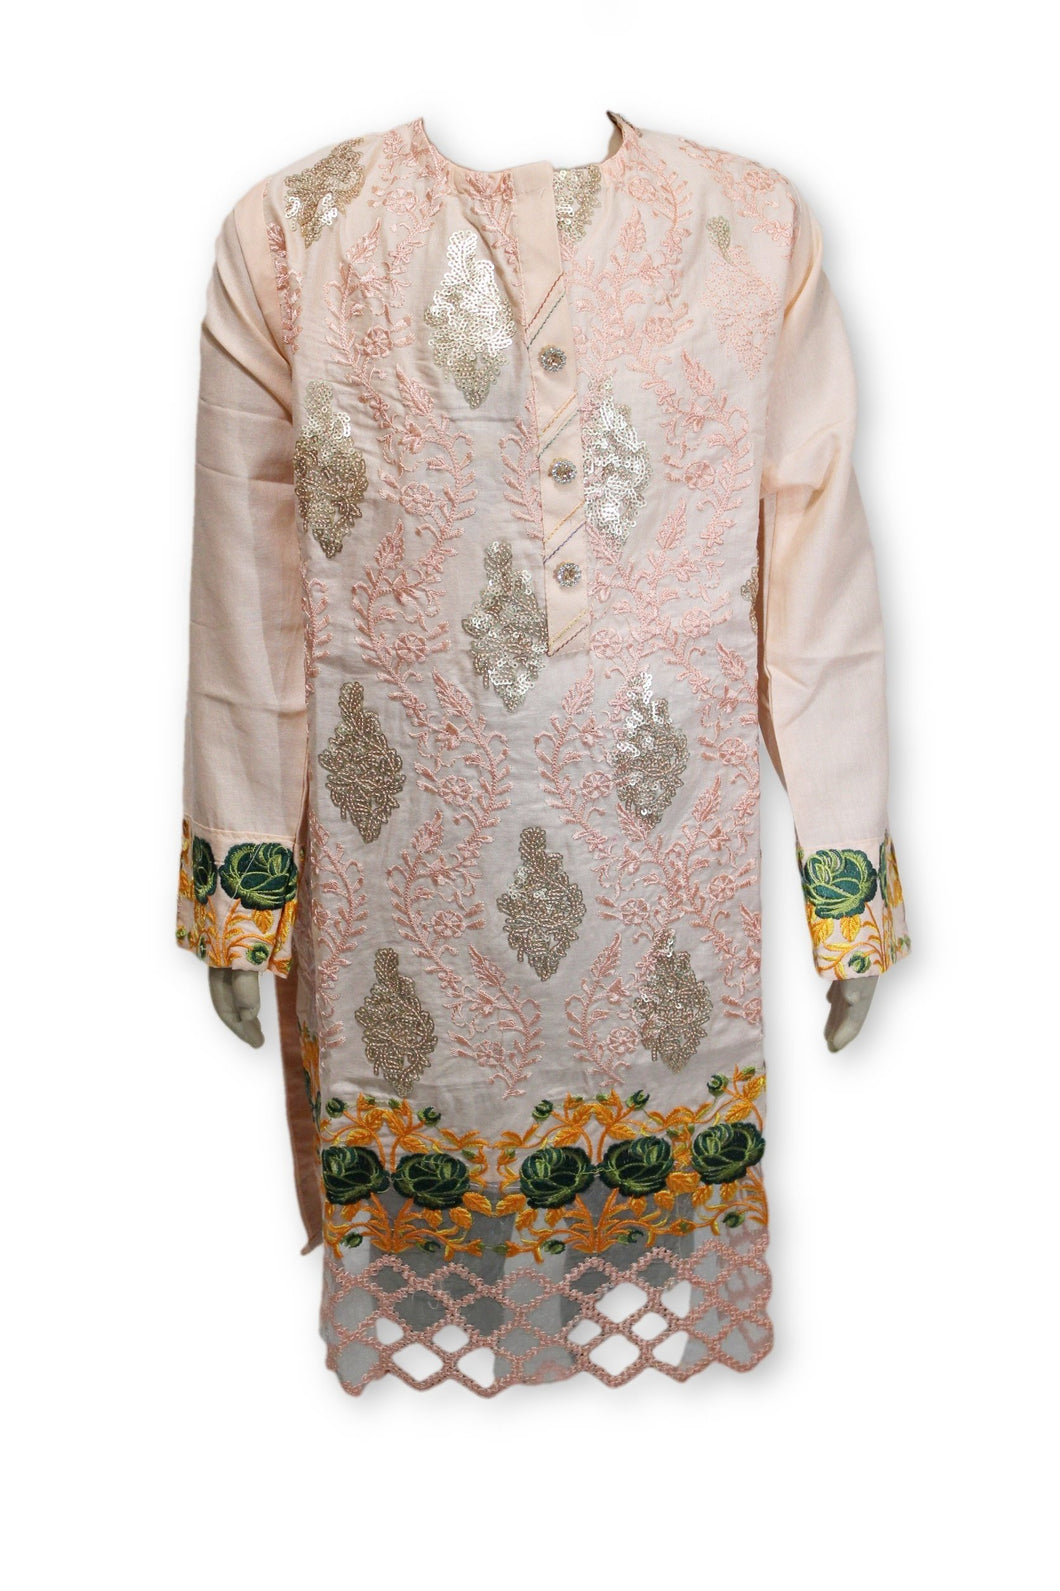 B11 Pakistani Indian Girls Kurtis Casual Wear